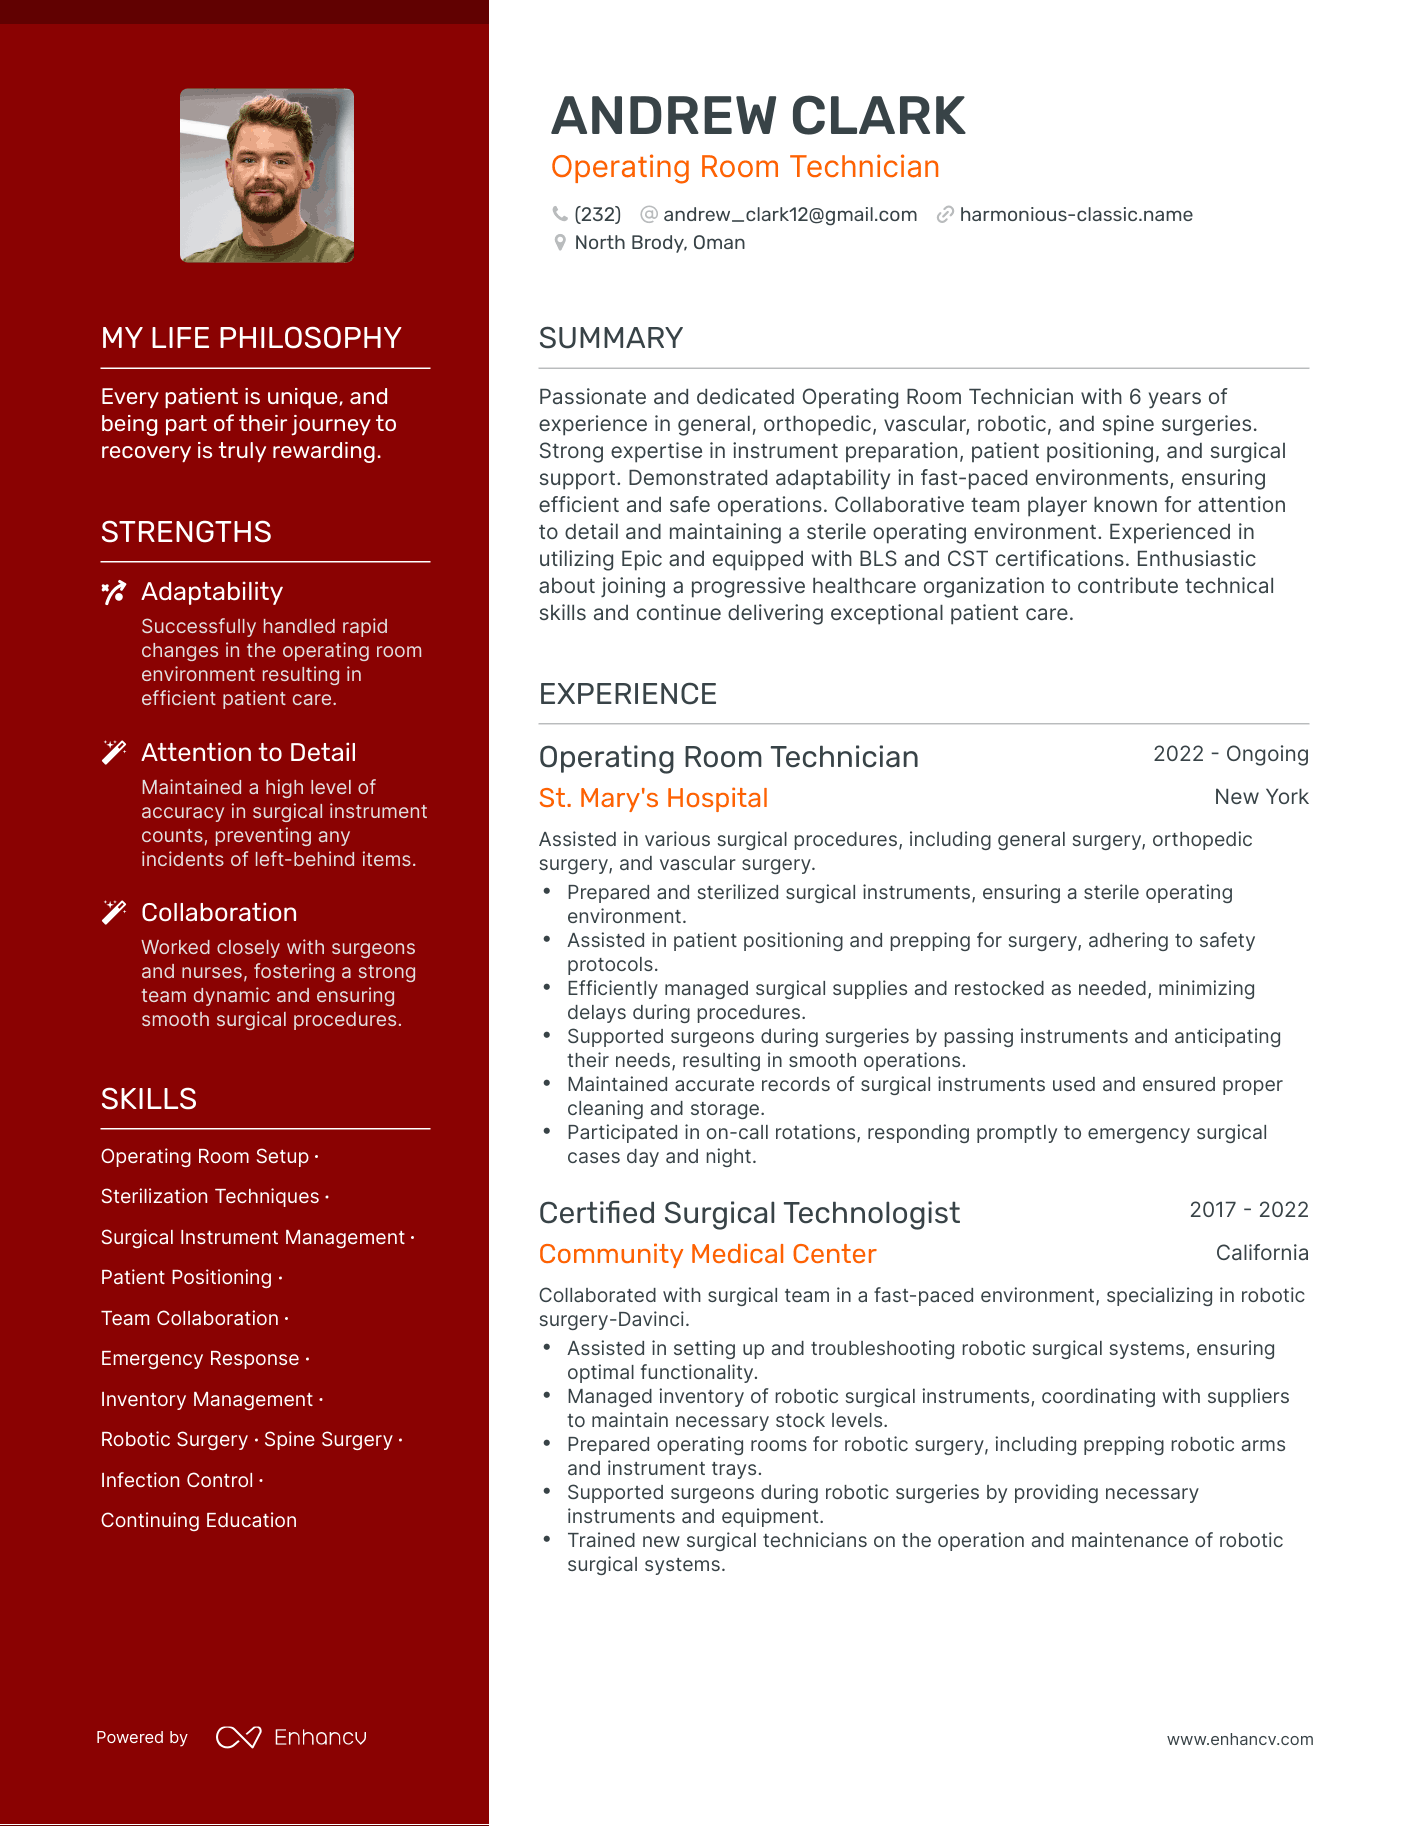 Operating Room Technician resume example